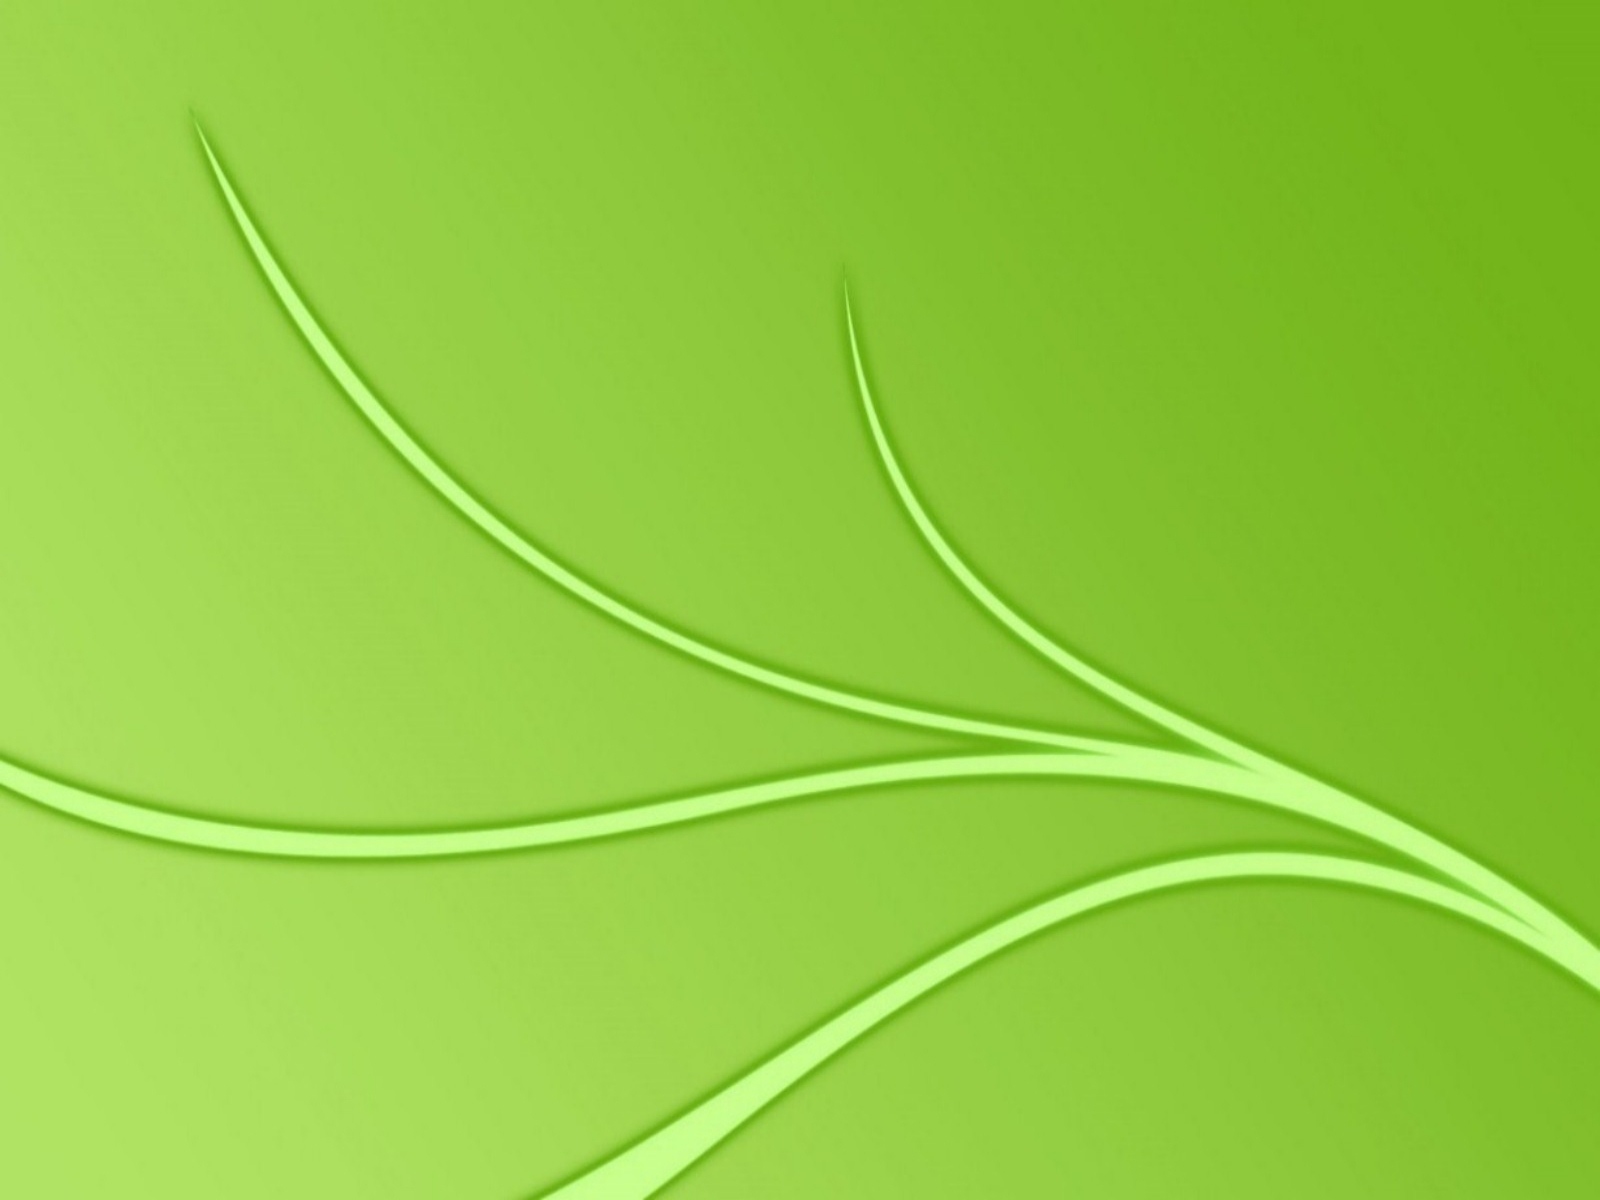 iphone mint green wallpaper